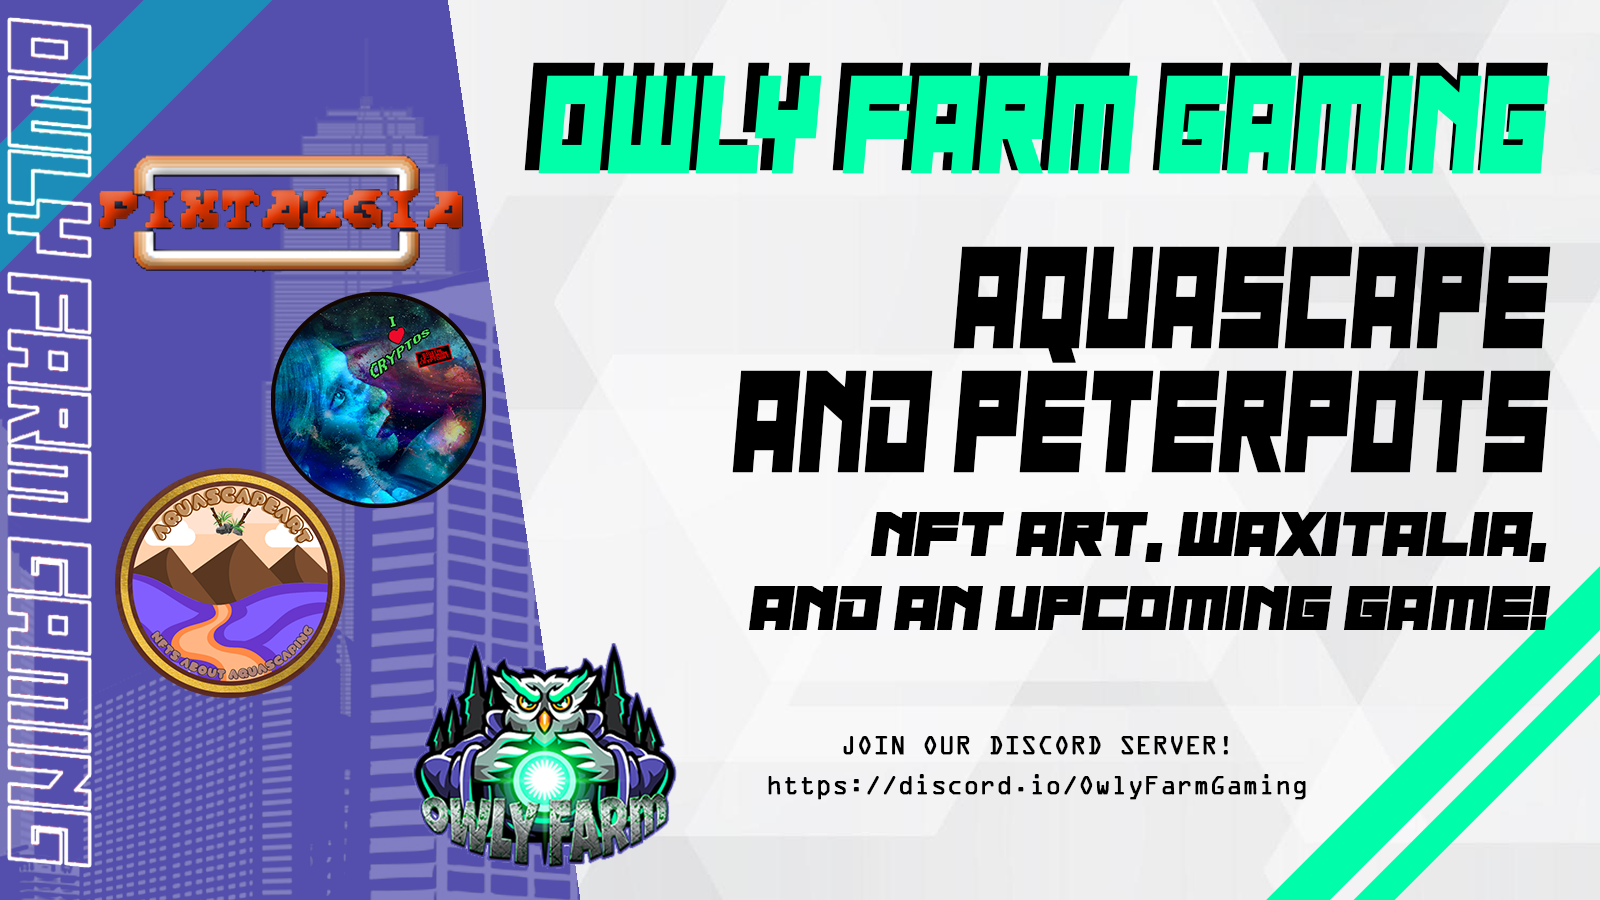 @owlyfarm/aquascape-and-peterpots-nft-art-waxitalia-community-and-an-upcoming-game